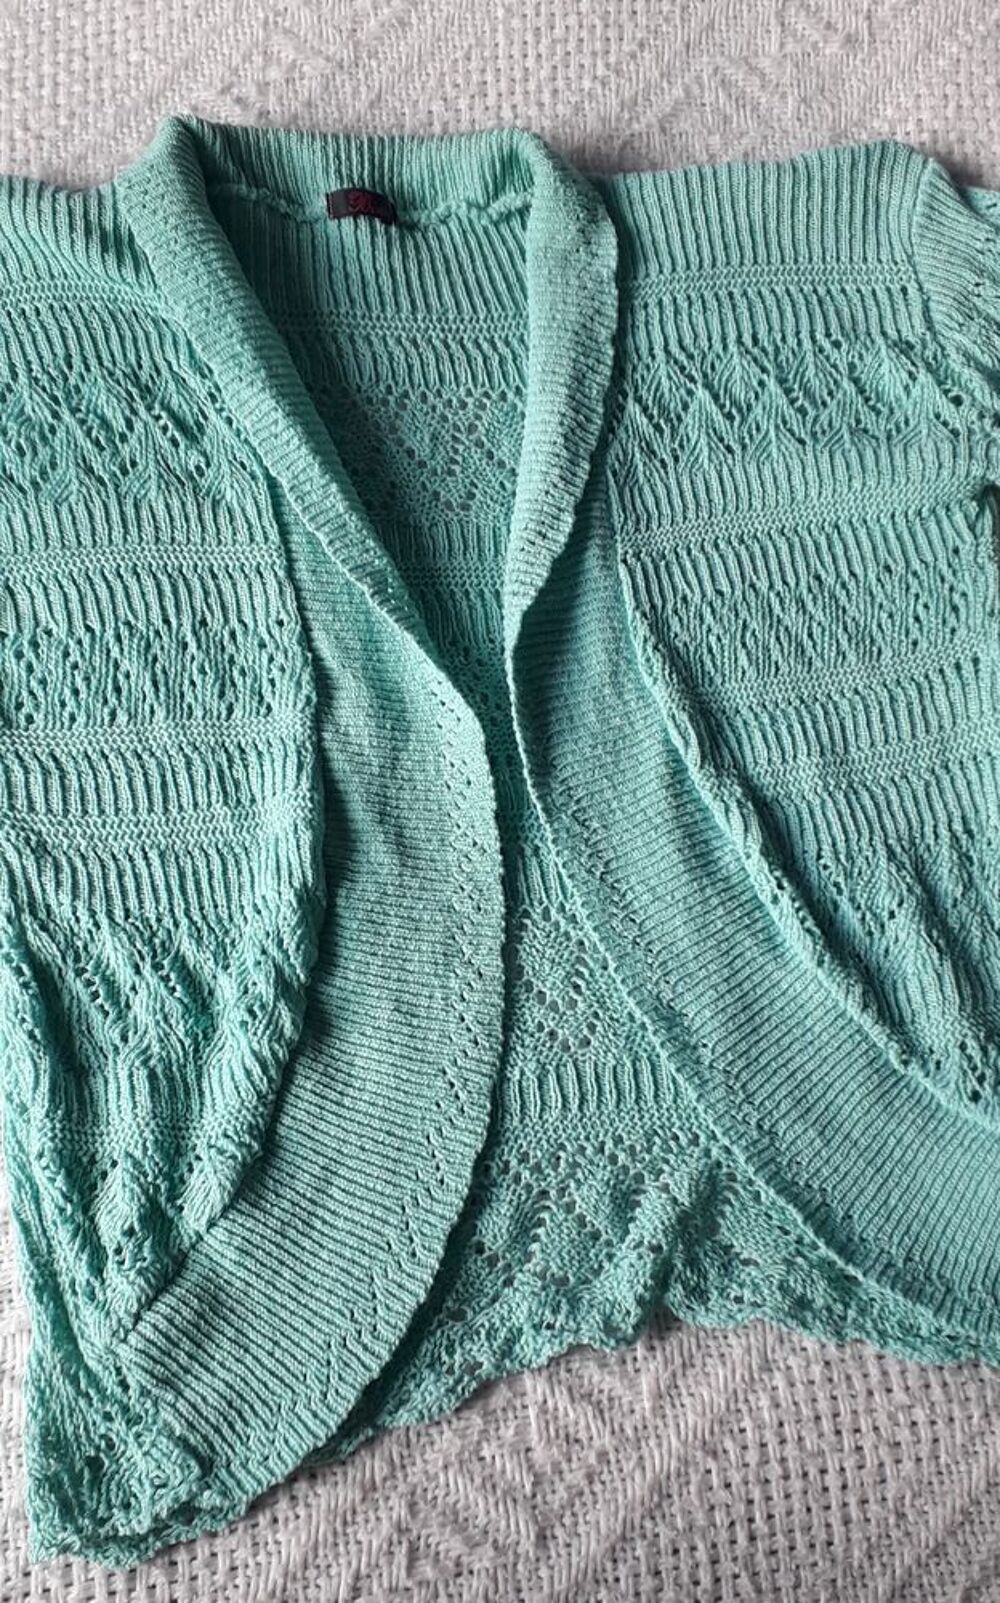 GILET court tricot, T. 42, marque BINA Vtements